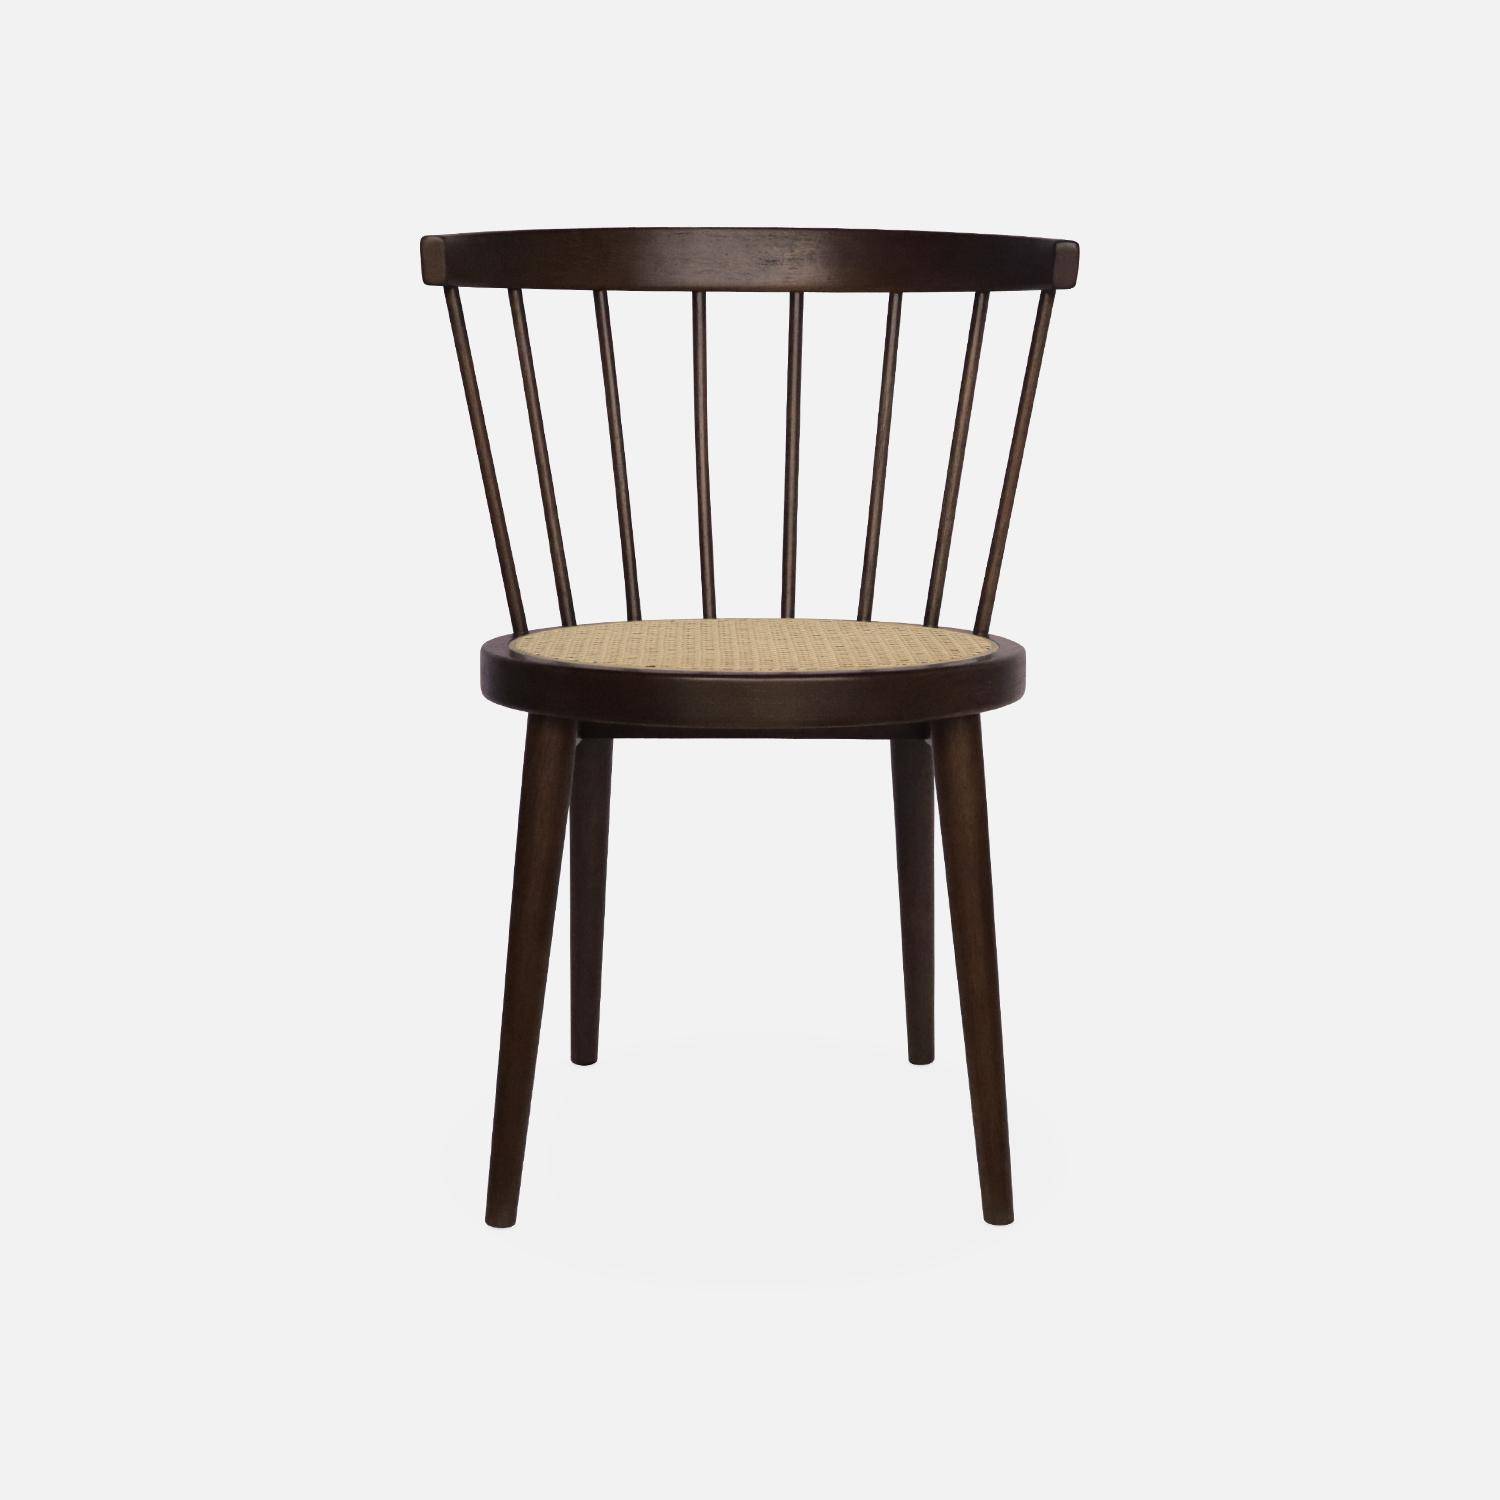 Pair of  Wood and Cane Chairs, Bohemian Spirit, Dark wood, L53 x W53.5 x H 6 cm Photo6